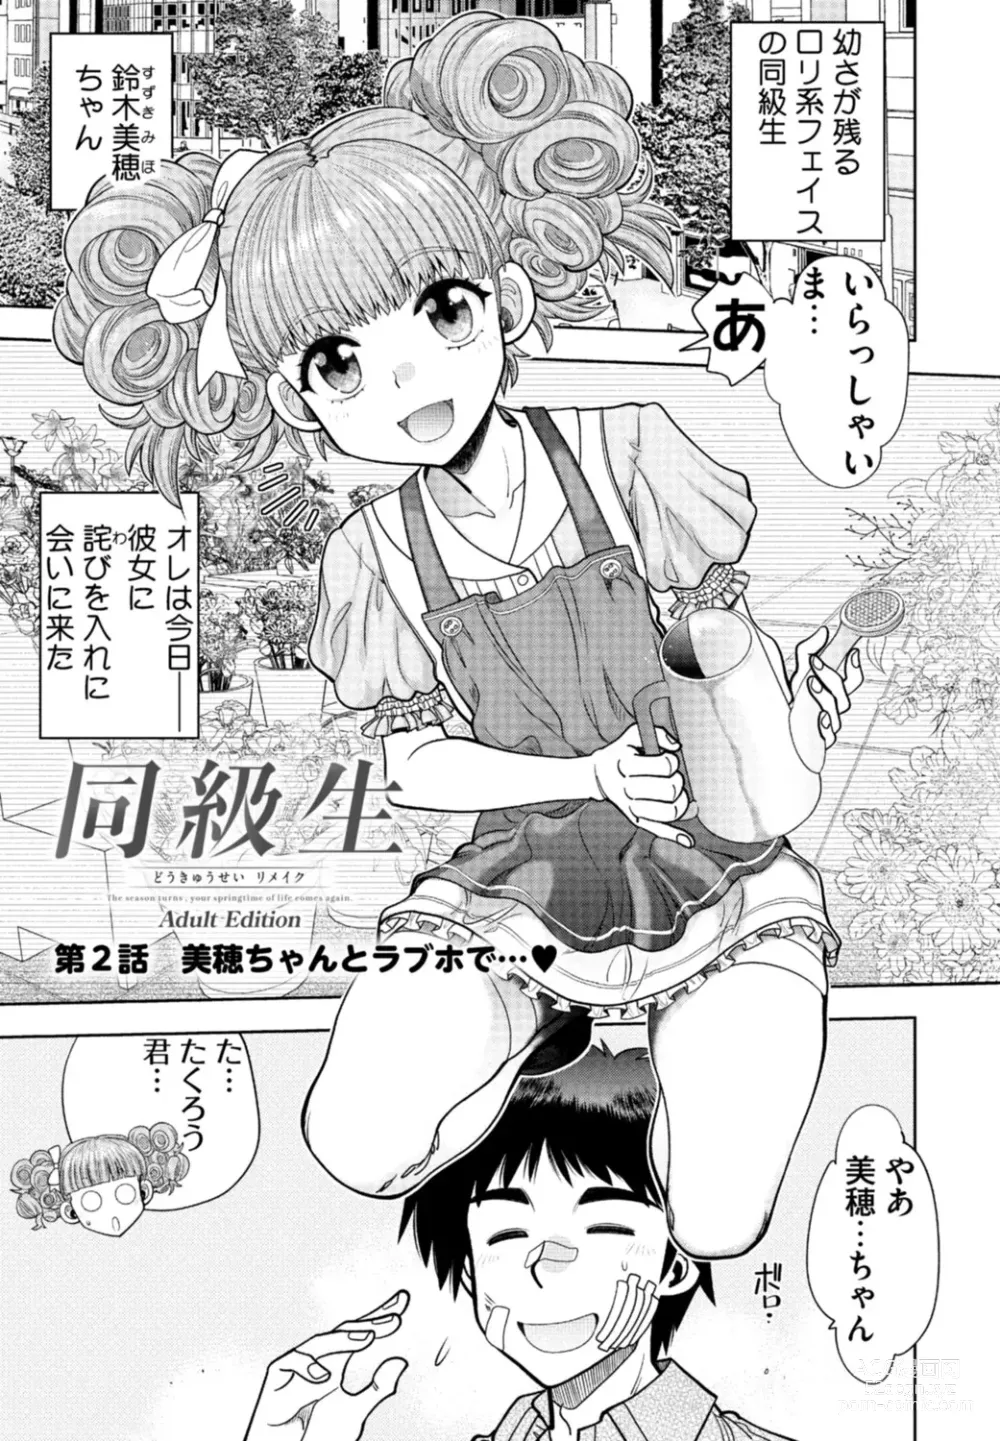 Page 25 of manga Doukyuusei  Remake Adult Edition